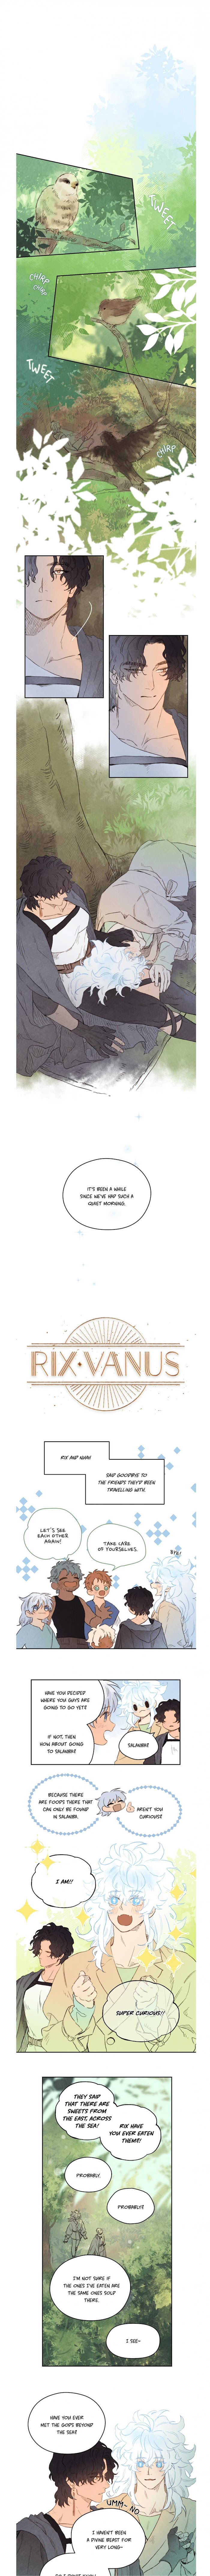 Rix Vanus - Page 2